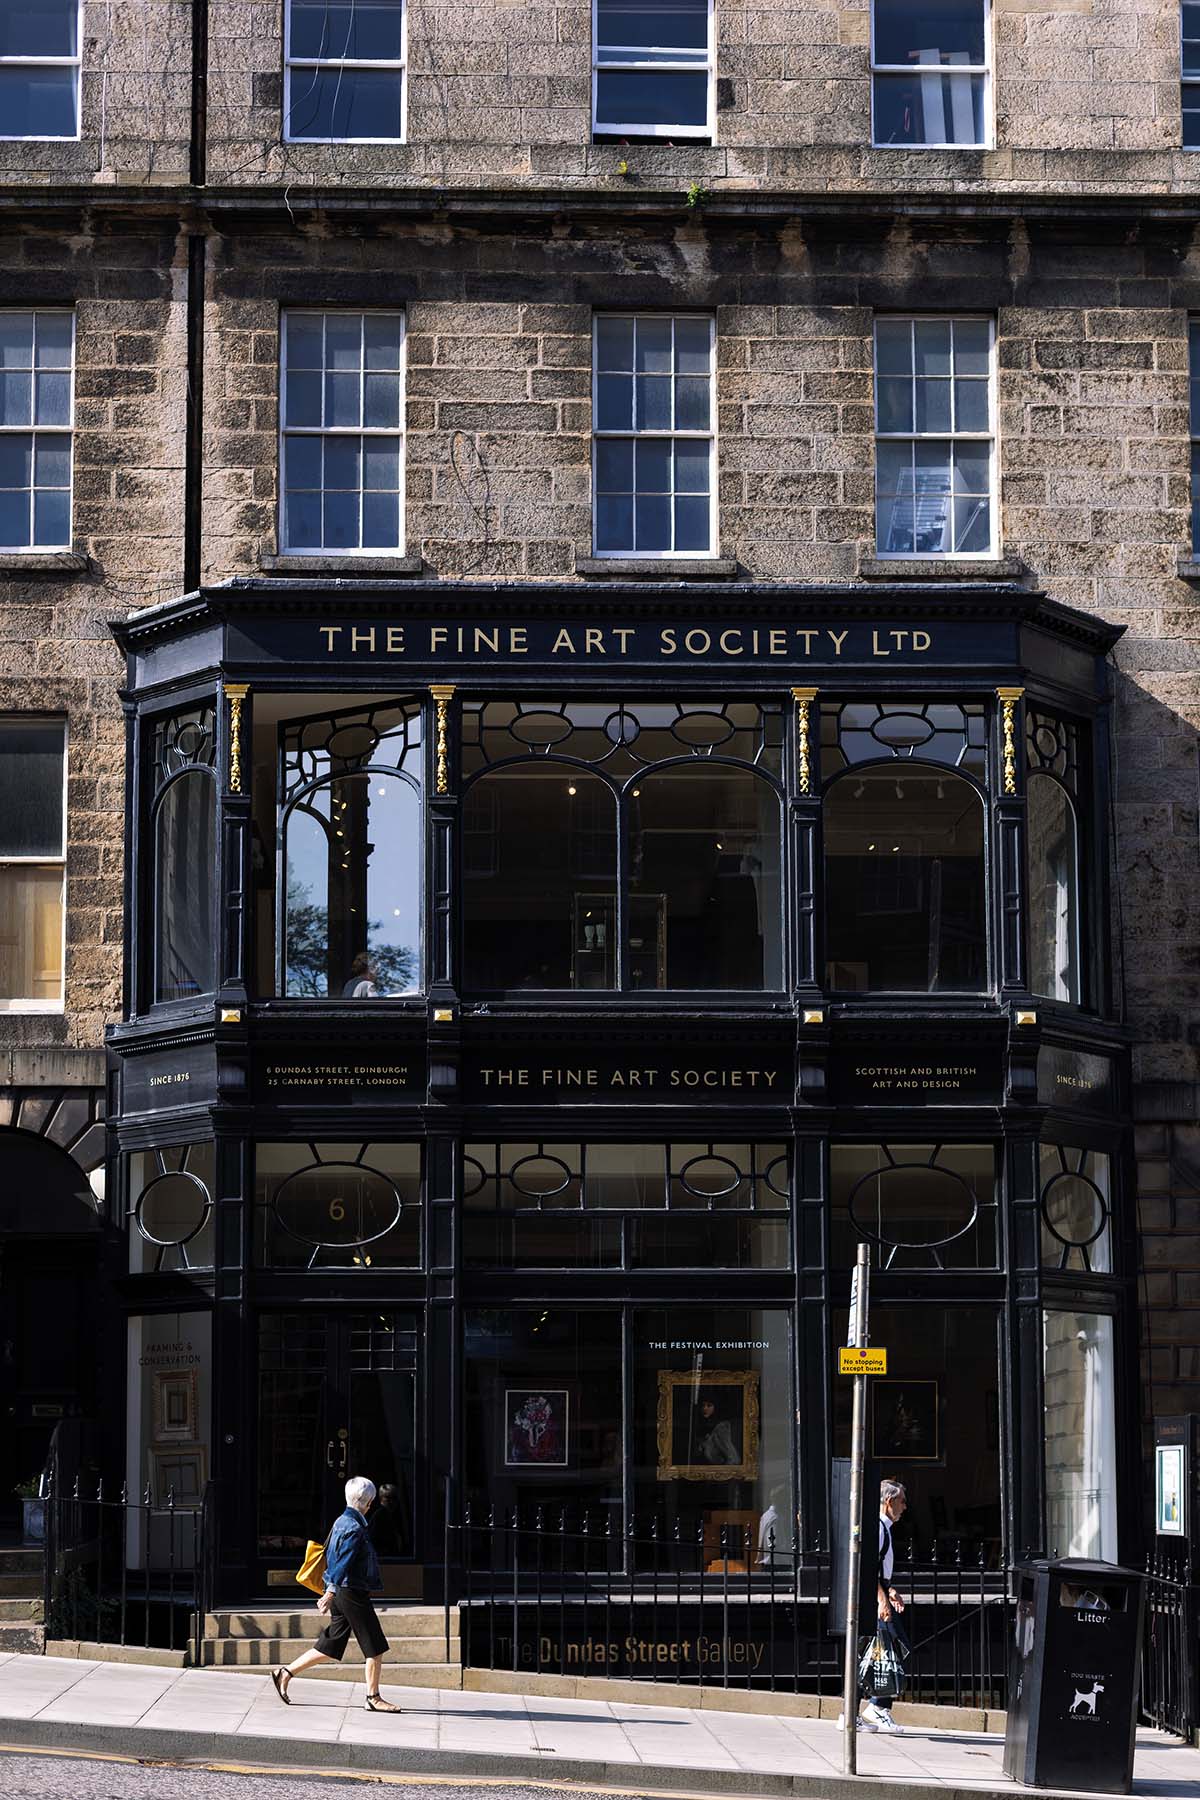 The exterior of The Fine Art Society in Edinburgh